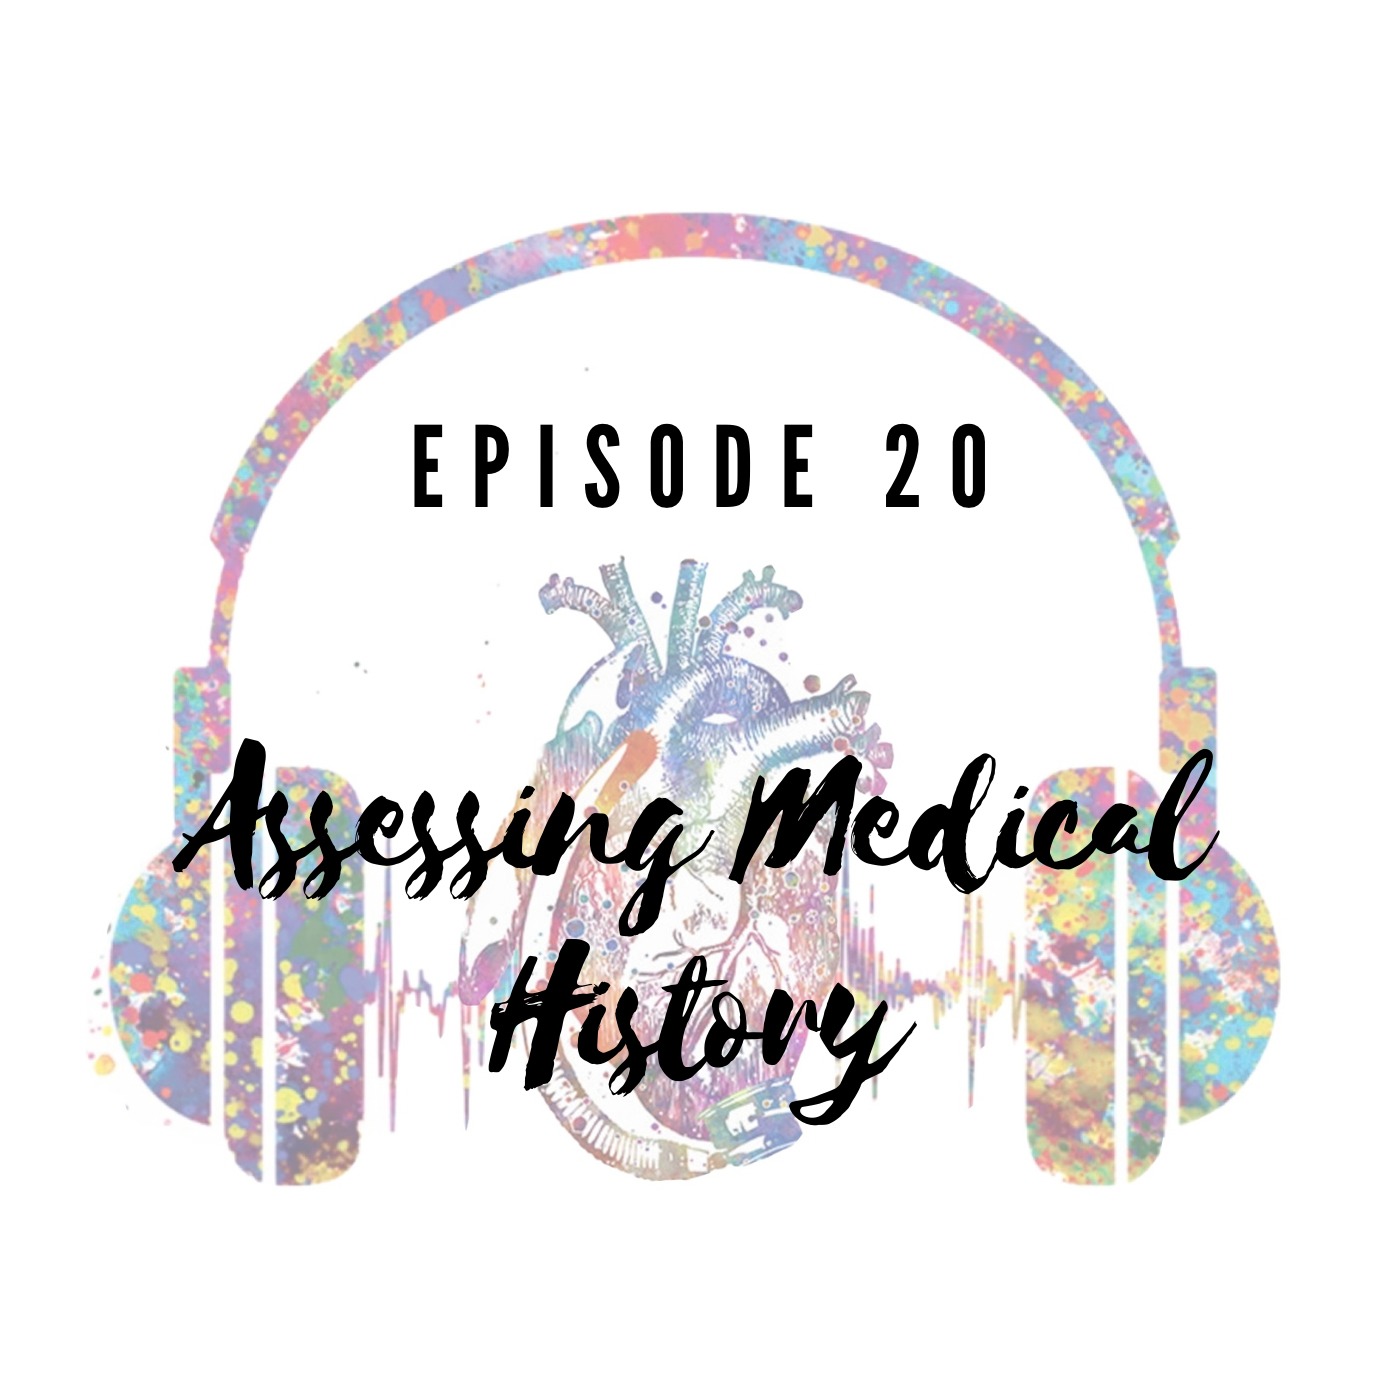 Episode 20: Assessing Medical History